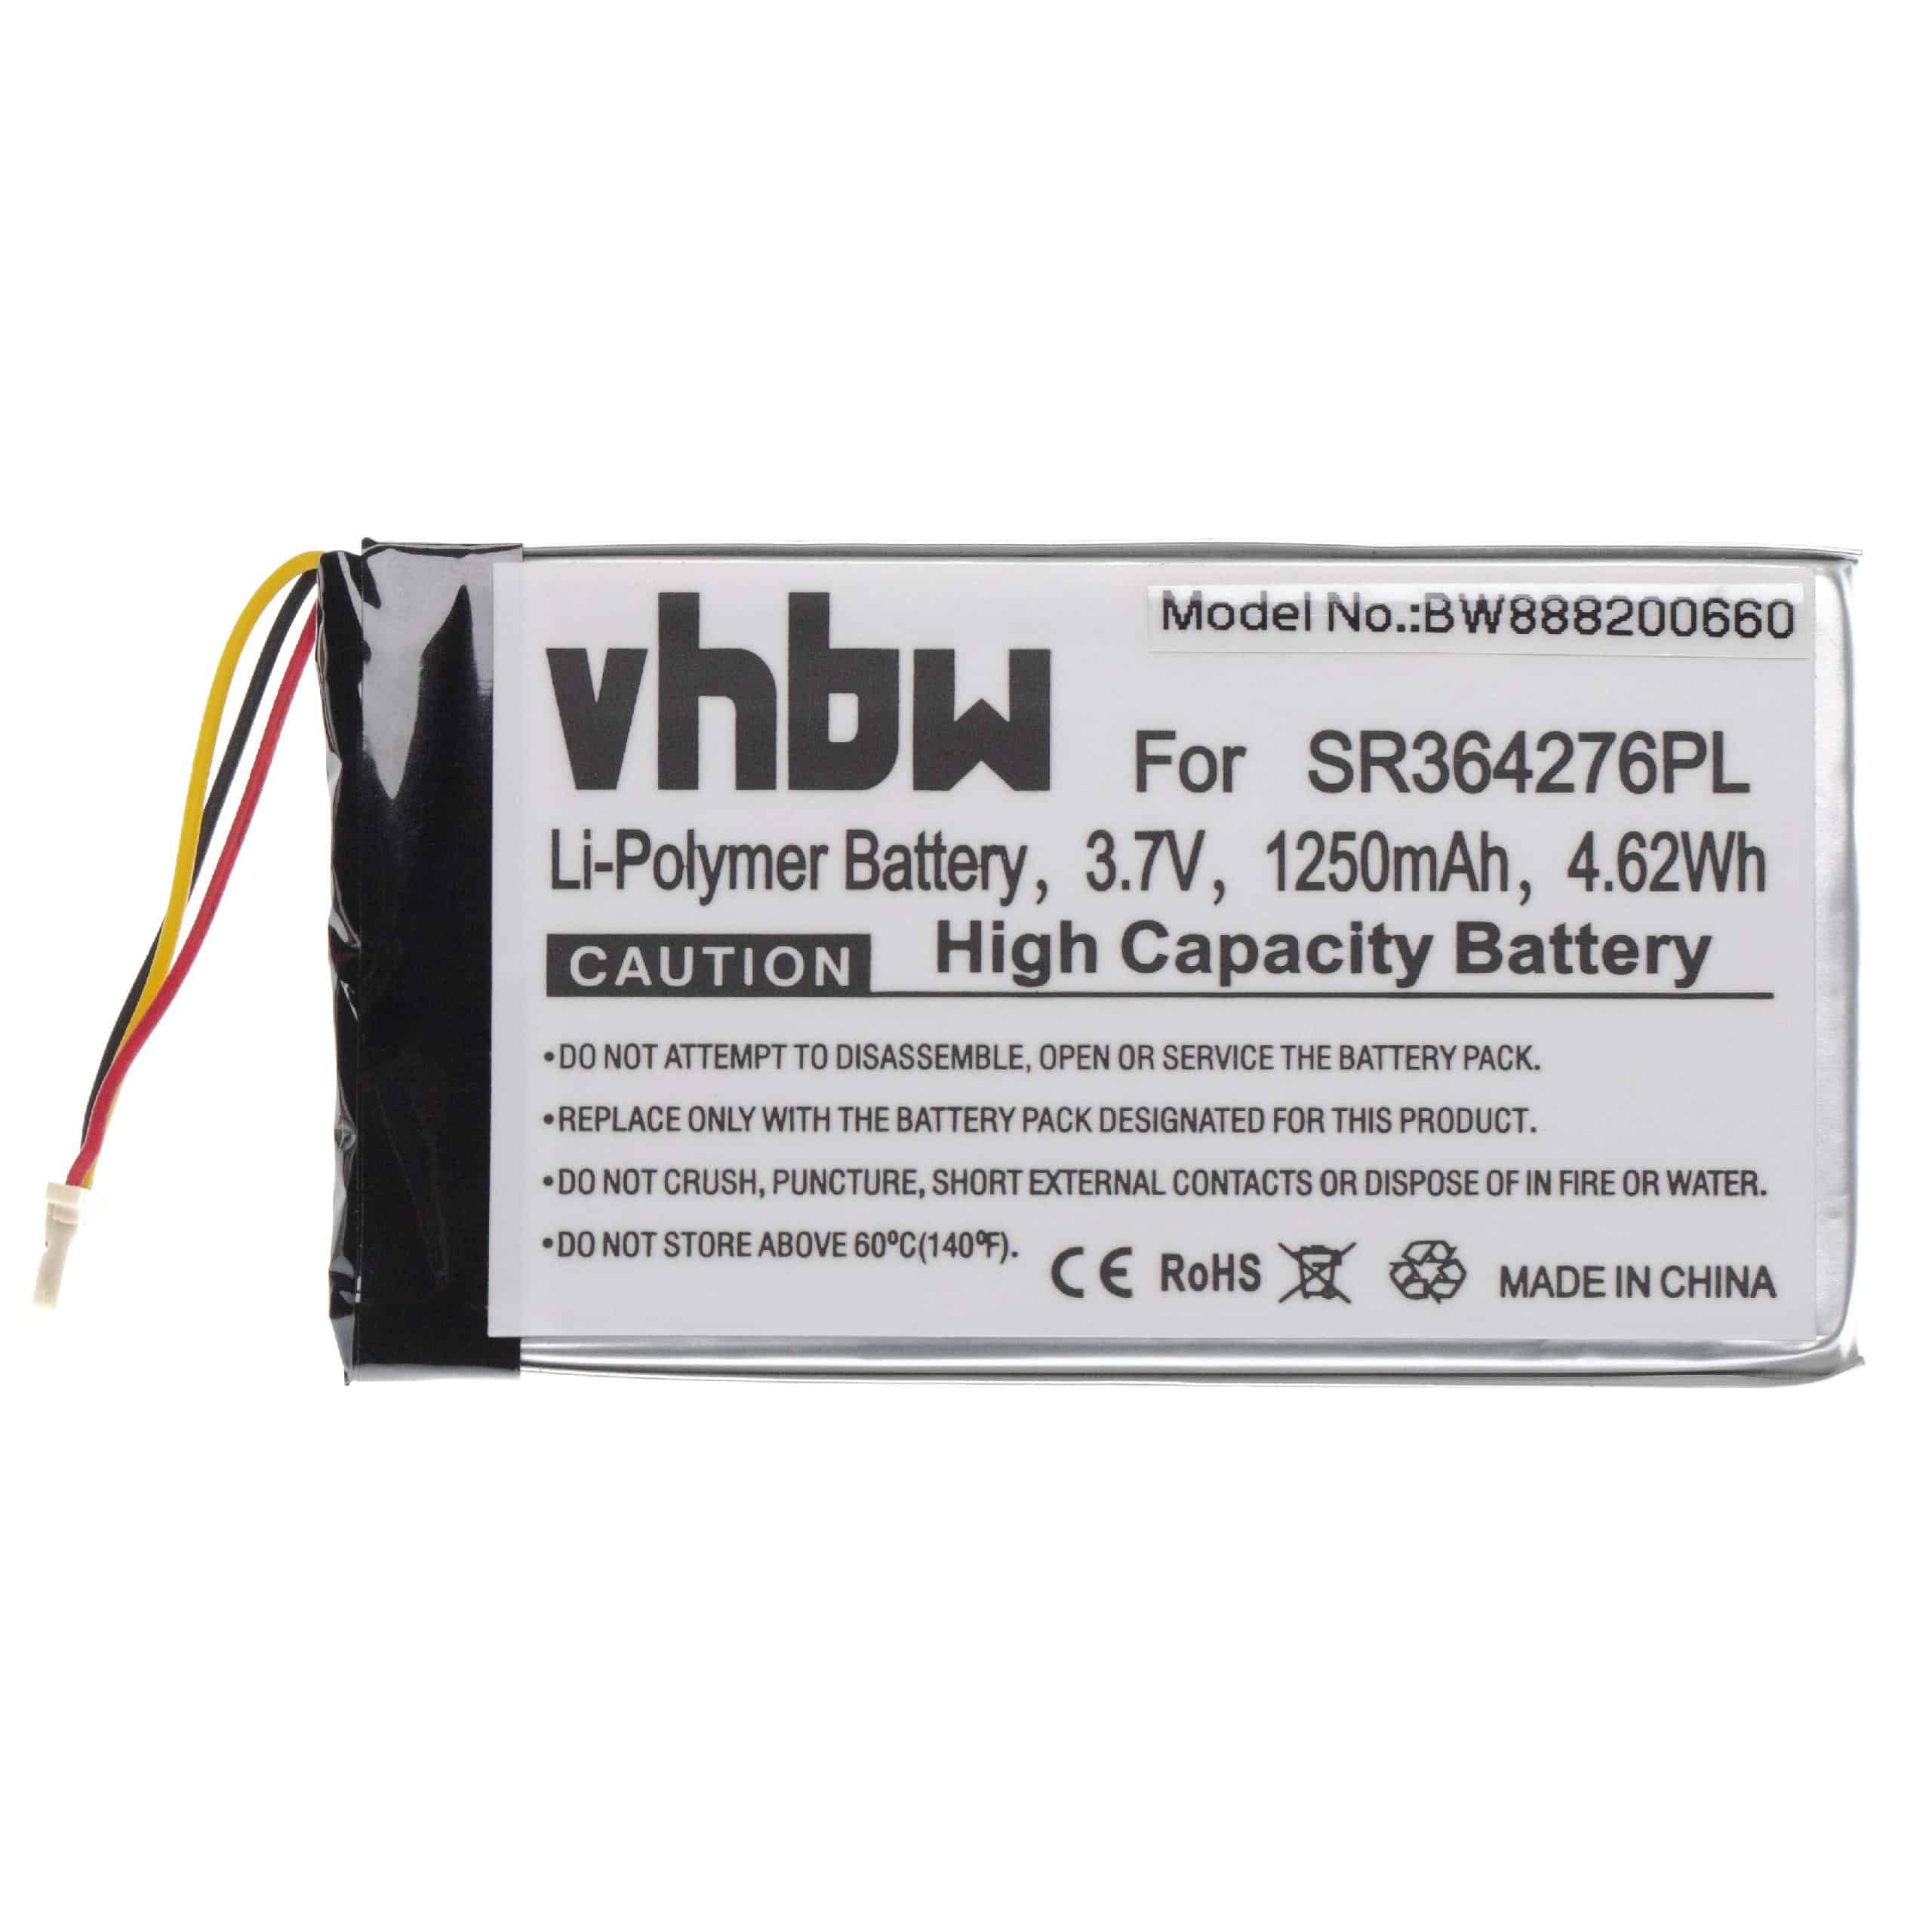 Batterie remplace Becker SR364276 pour navigation GPS - 1250mAh 3,7V Li-polymère